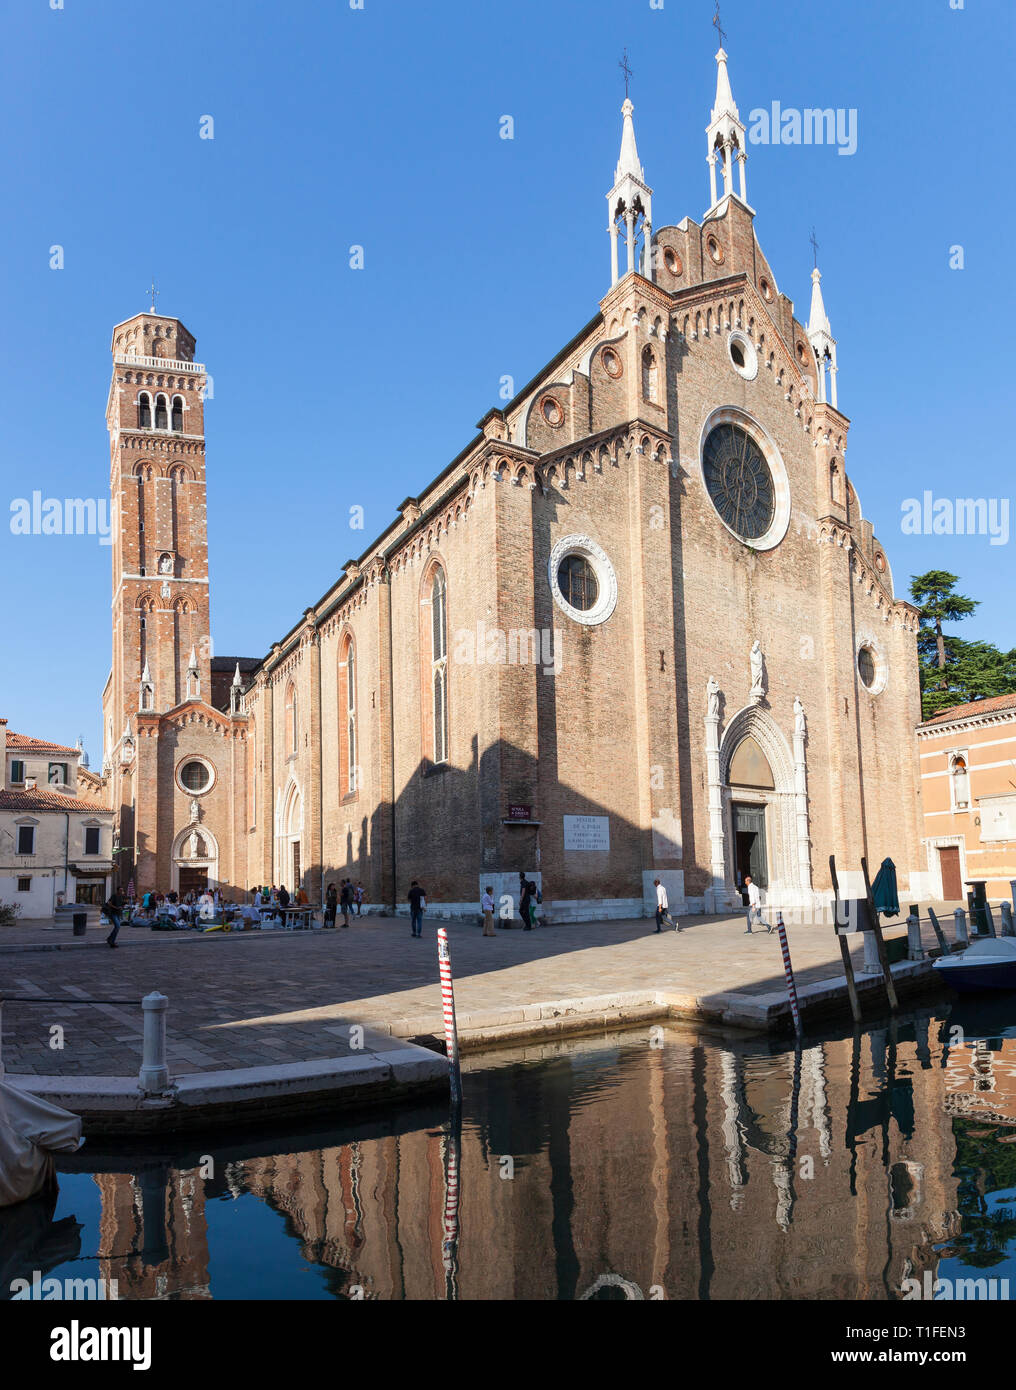 Die Basilika Santa Maria Gloriosa dei Frari, Campo dei Frari, San Polo, Venedig, Venetien, Italien, reflectiion auf den Kanal Rio dei Frari Stockfoto